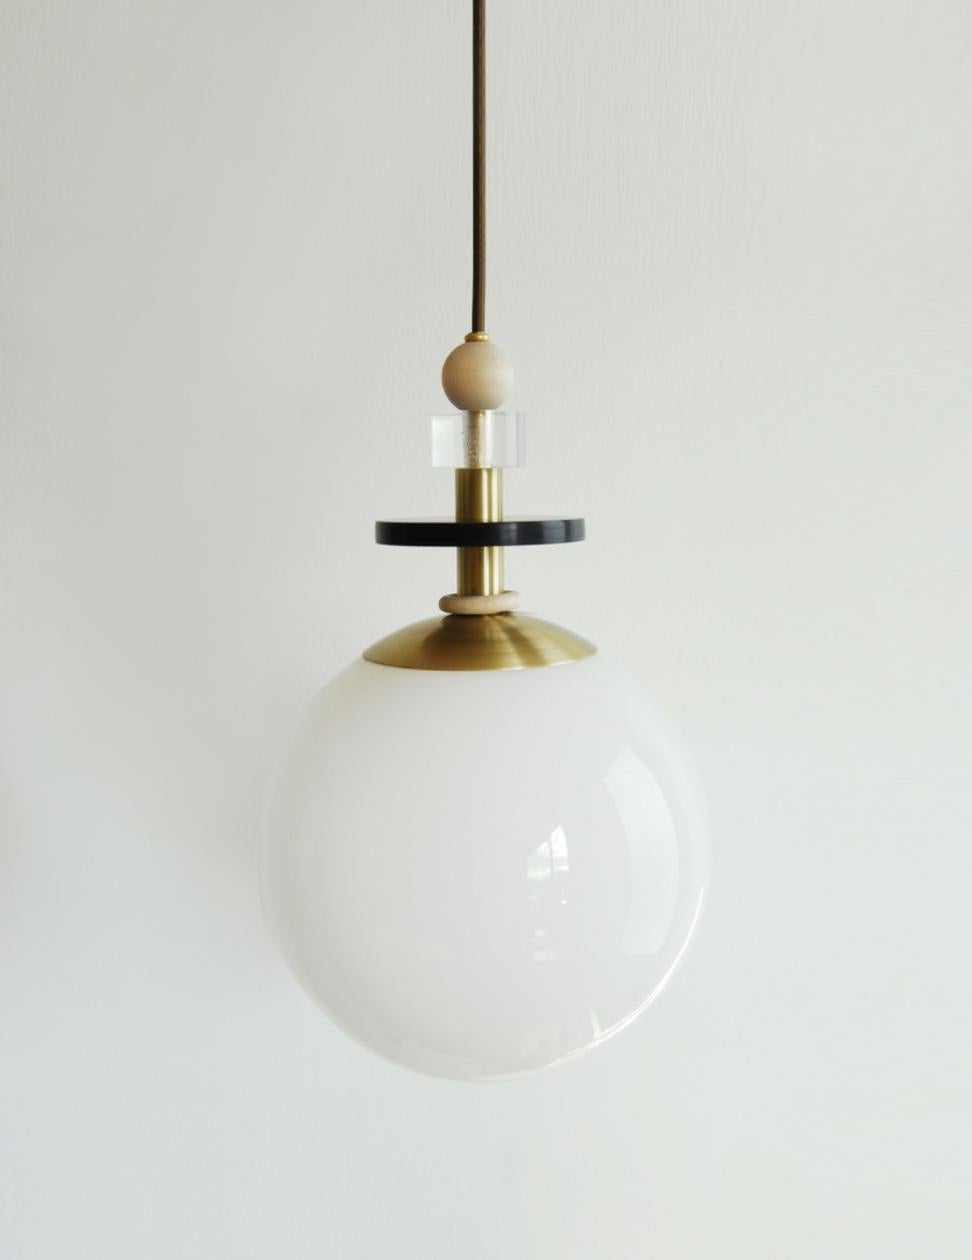 Maru small pendant by Ladies & Gentlemen Studio.
Dimensions: 6